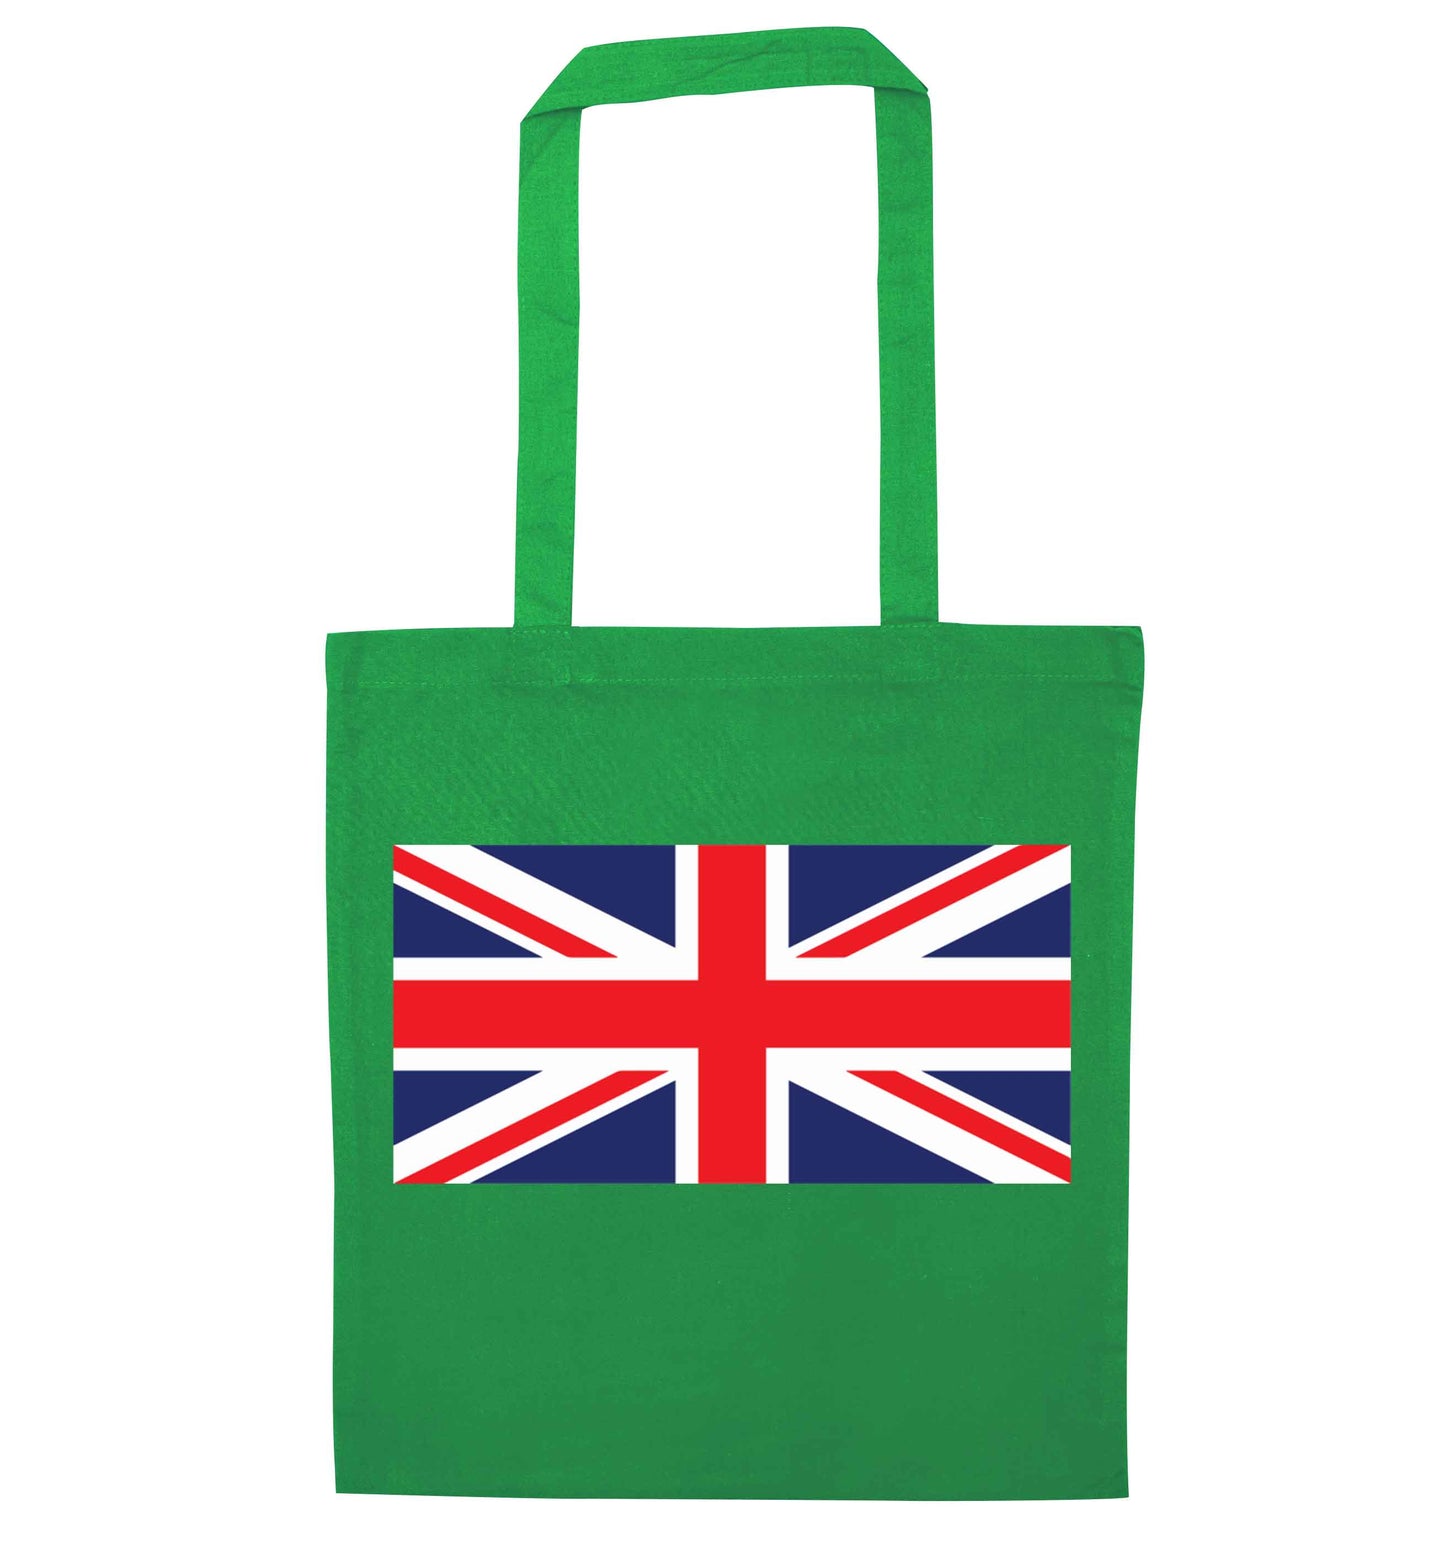 Union Jack green tote bag